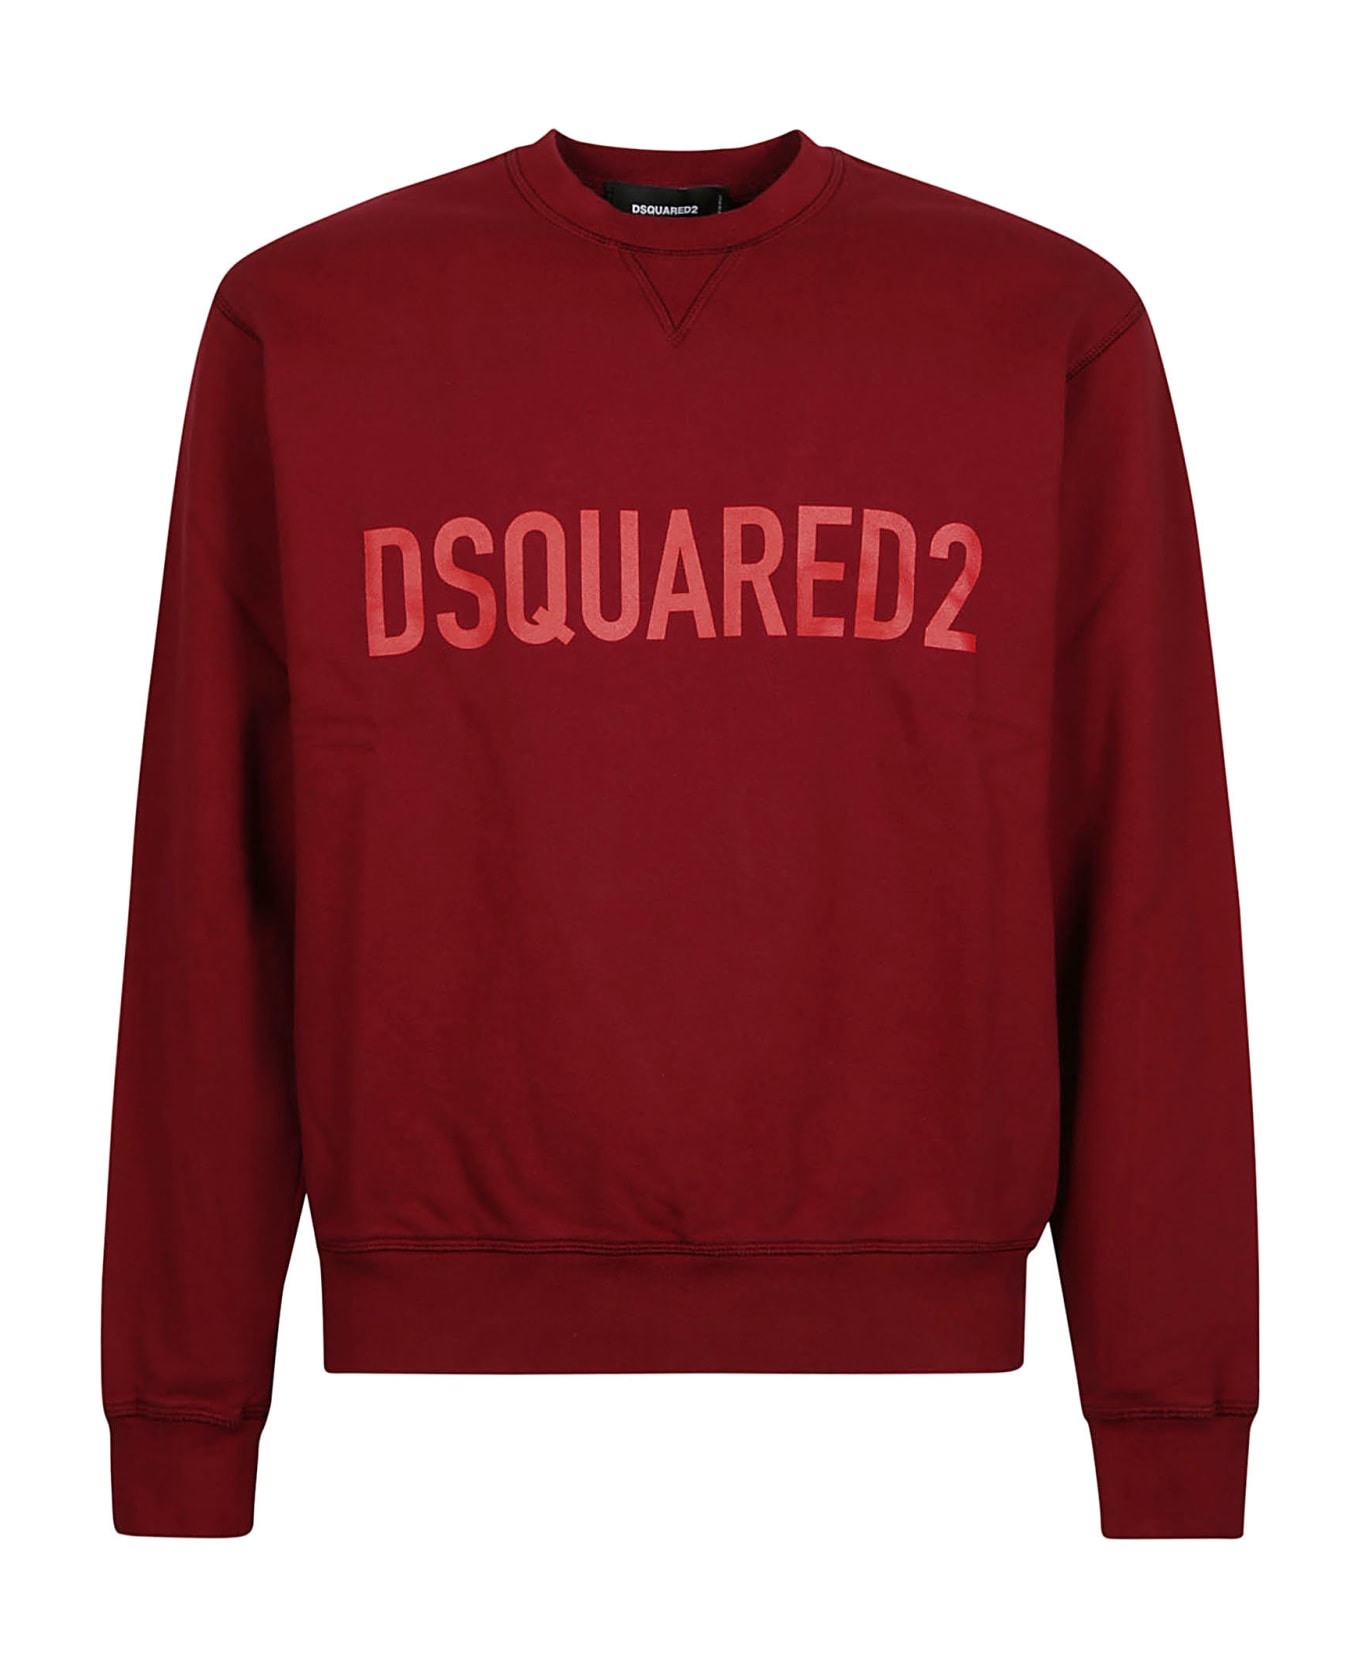 Dsquared2 Cool Fit Sweatshirt - W Cherry Pop